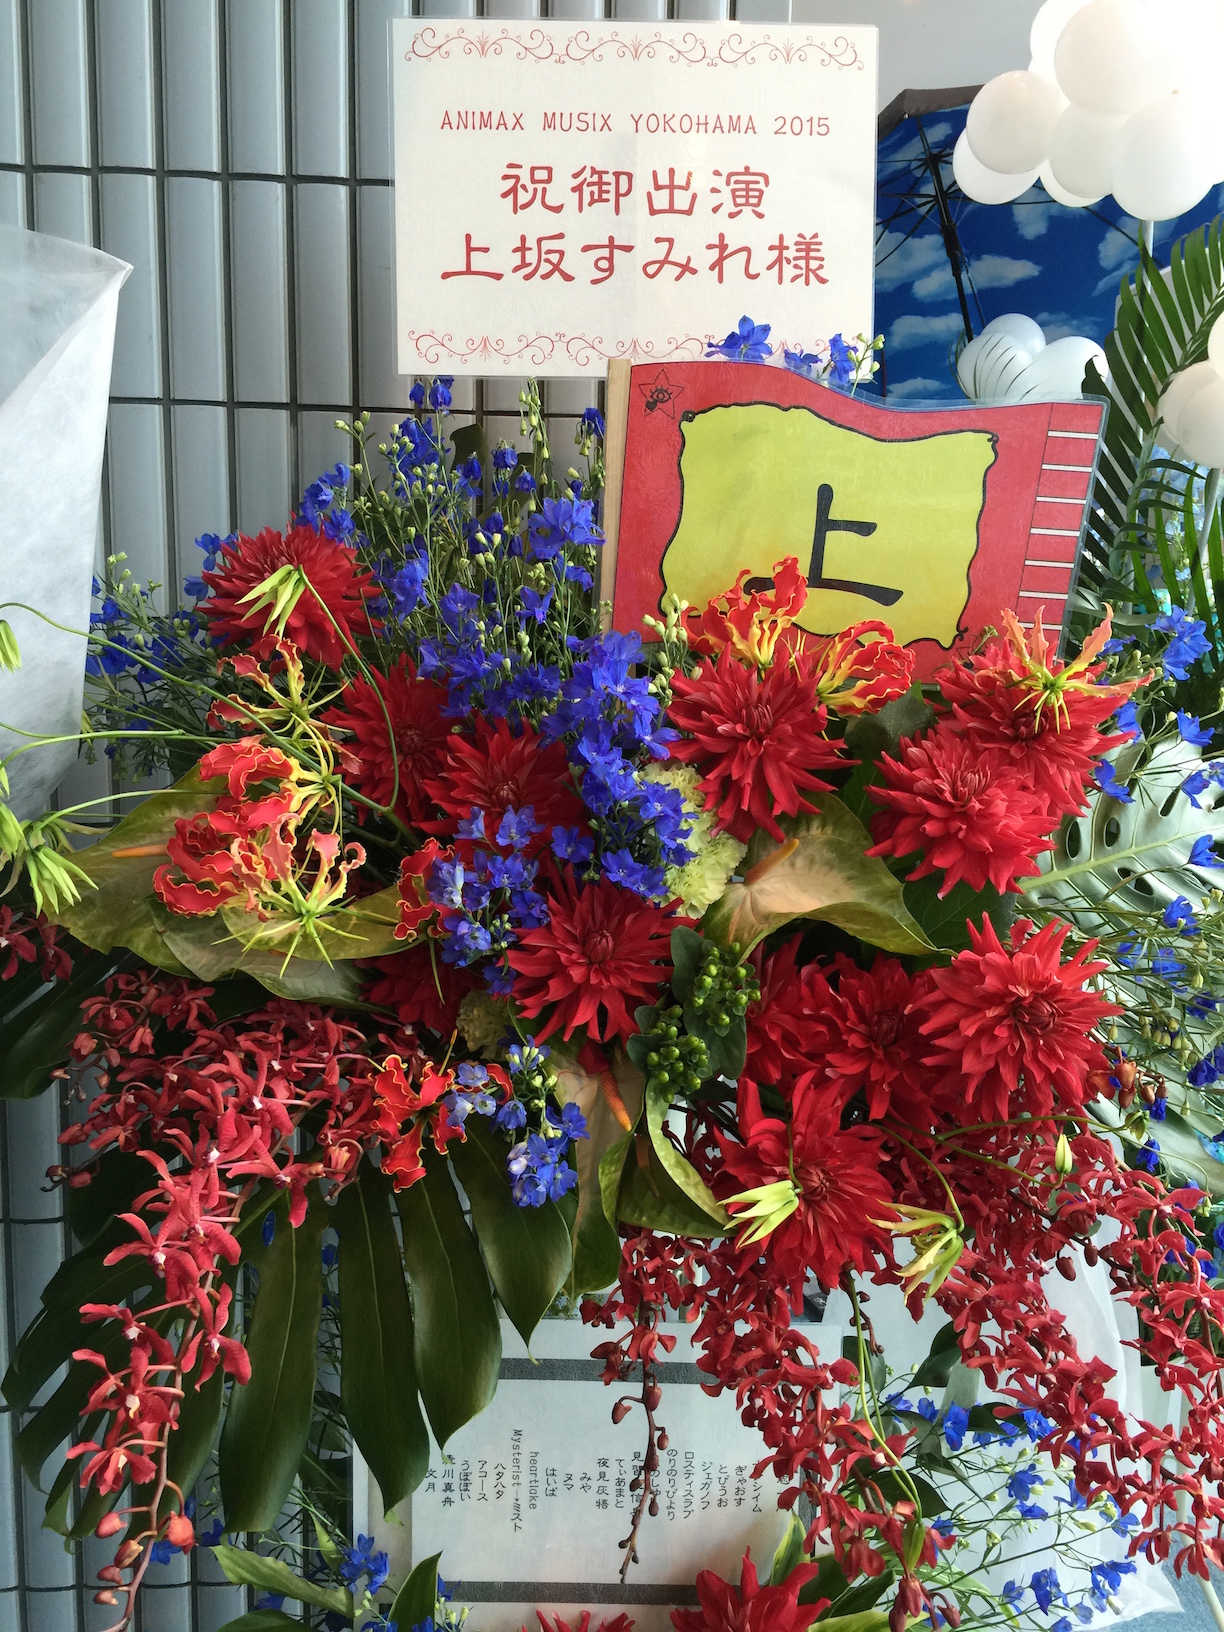 Animax Musix 2015 Yokohamaに行ってきました Time To Live Forever